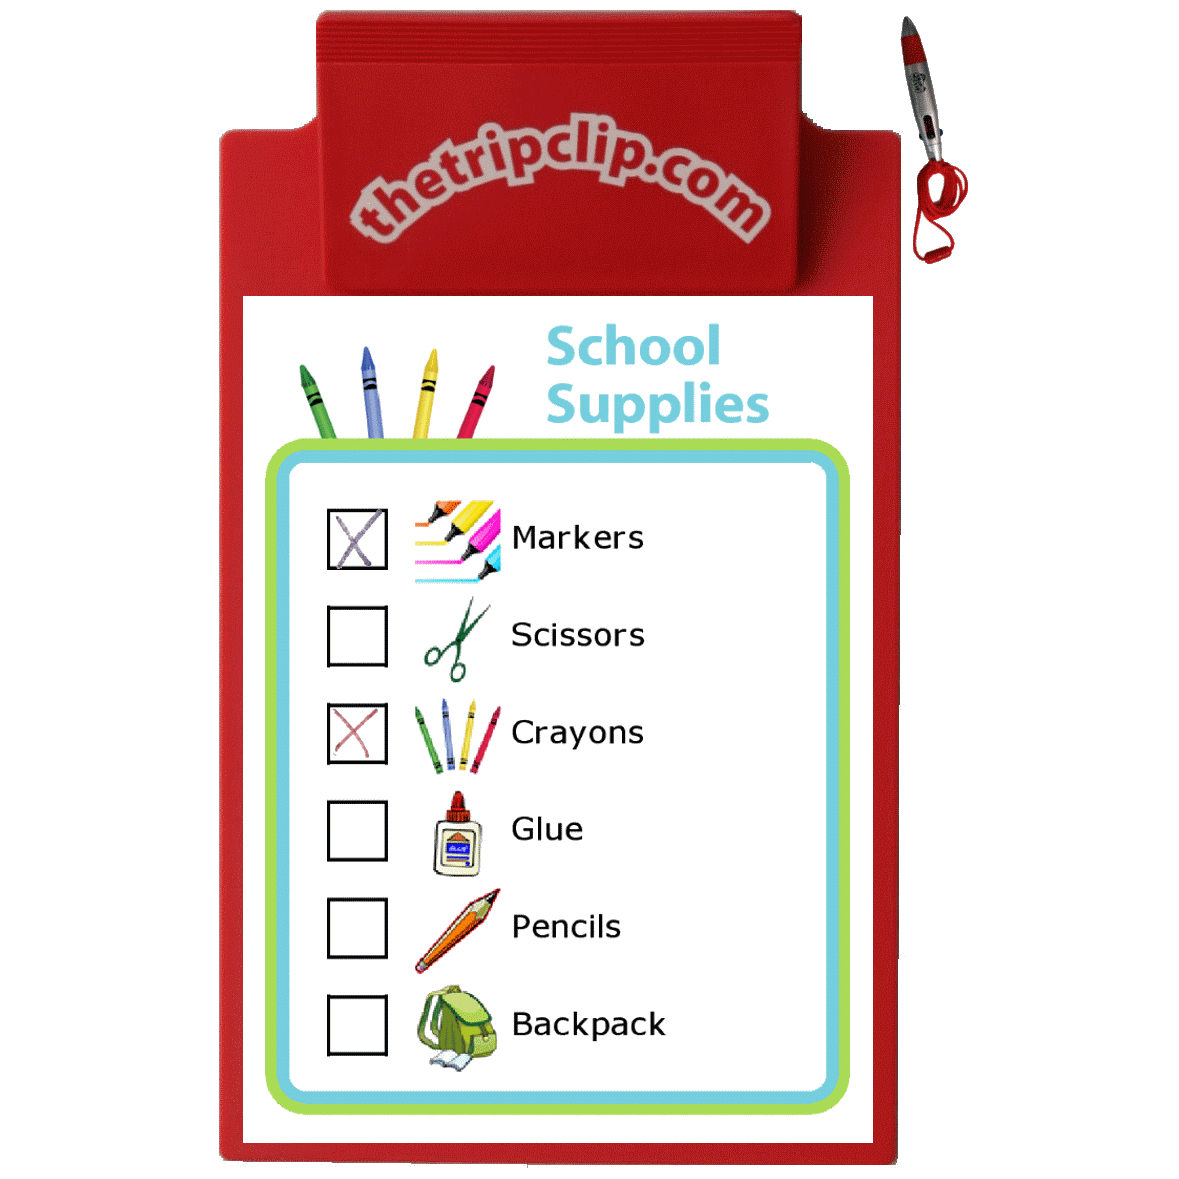 School Supplies for Kids